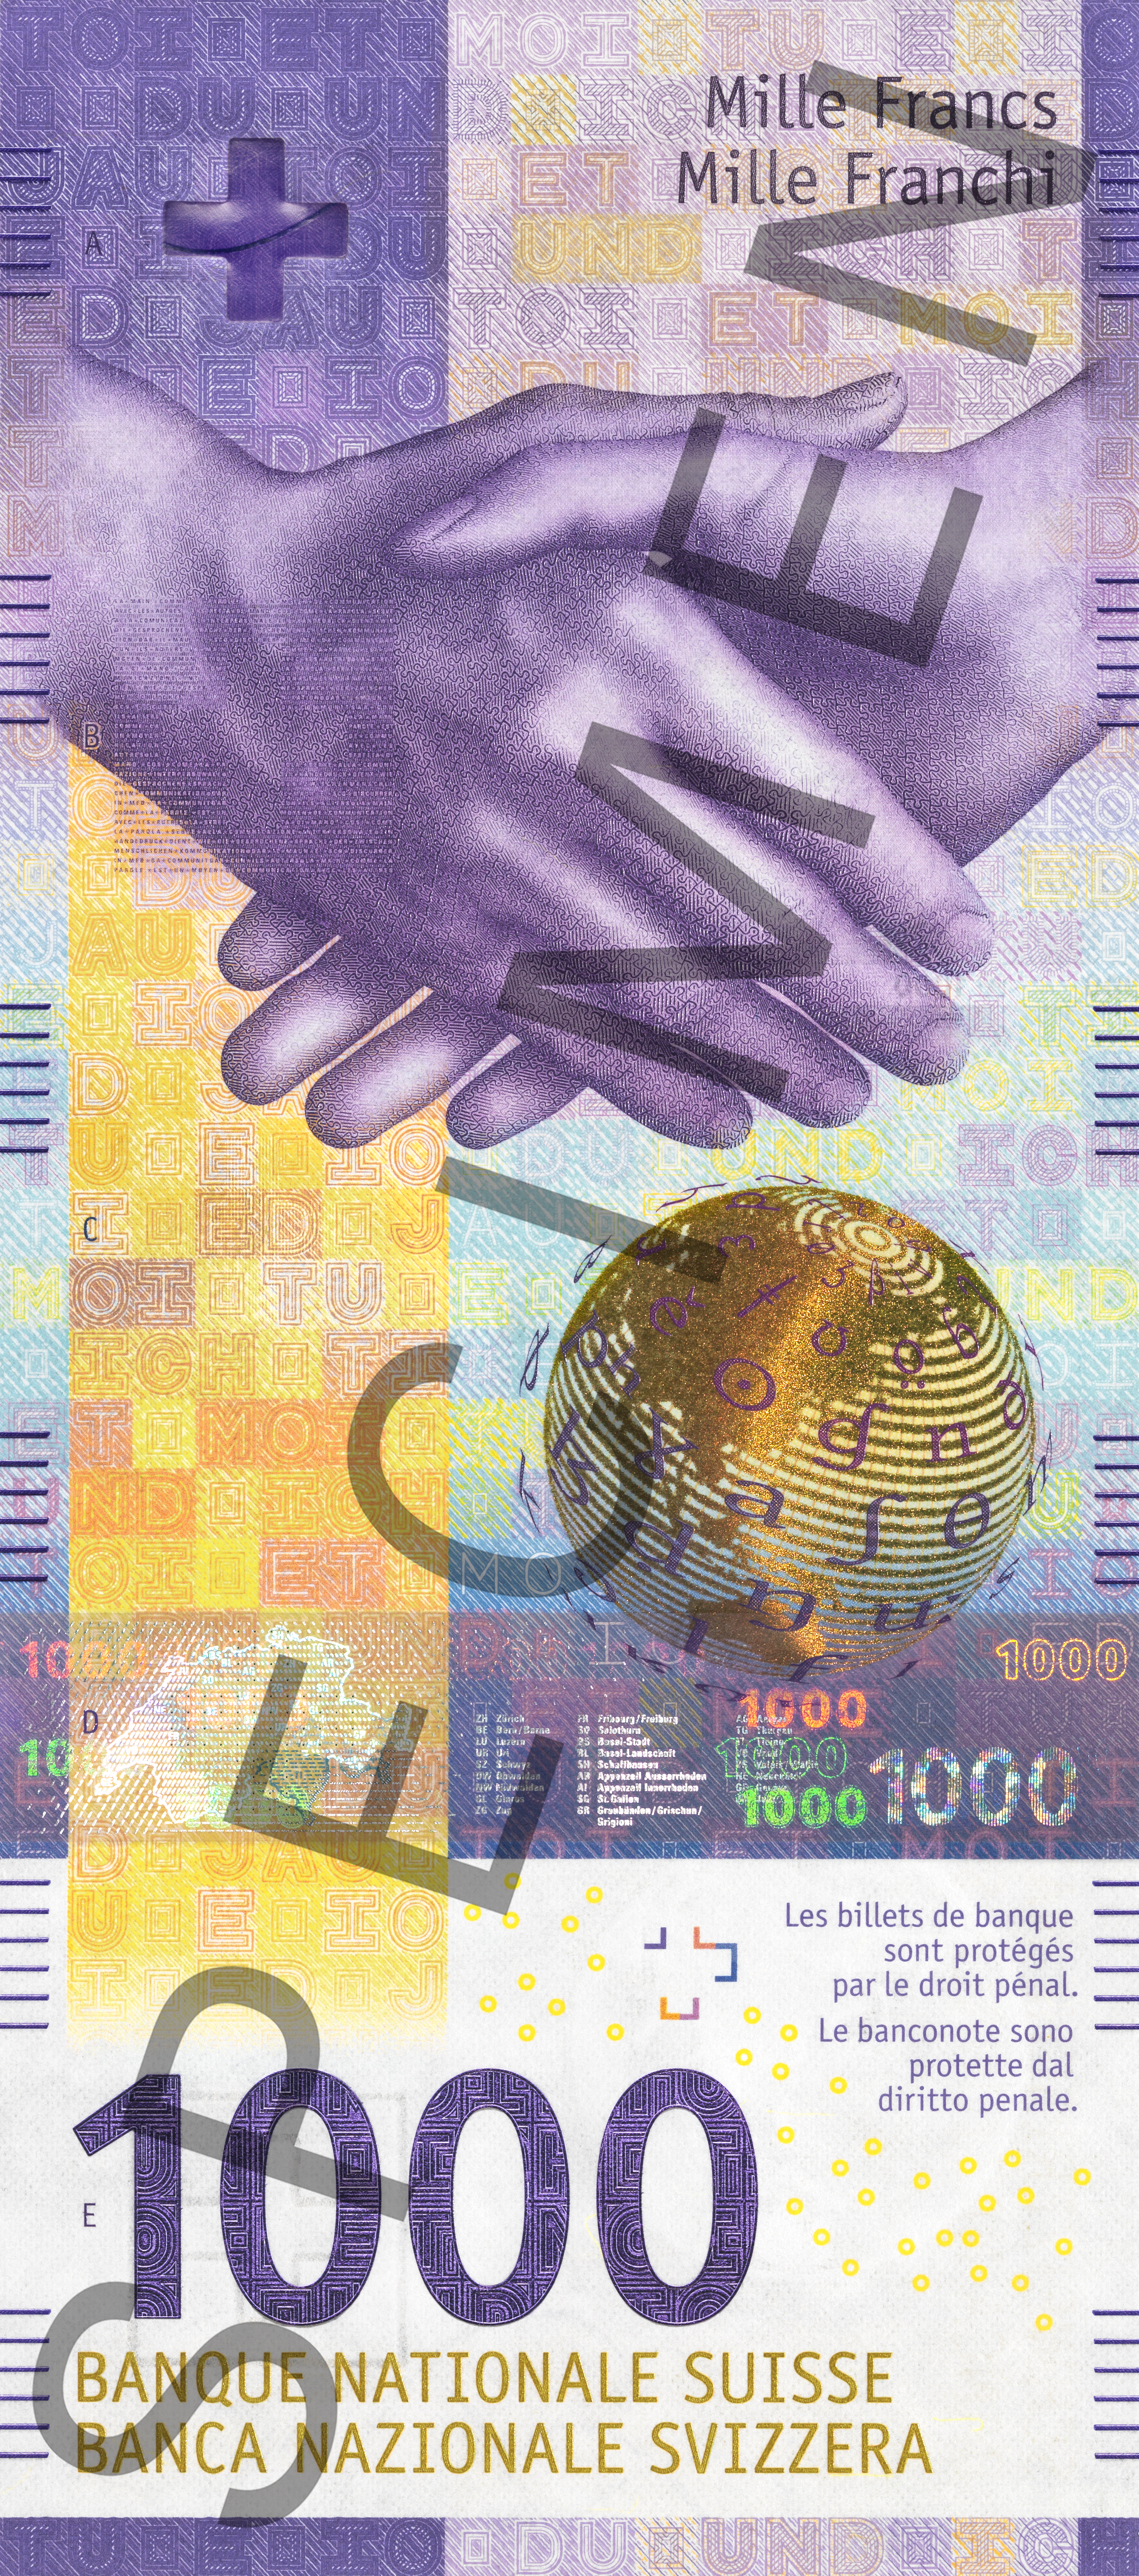 1000-franc note Specimen (front)